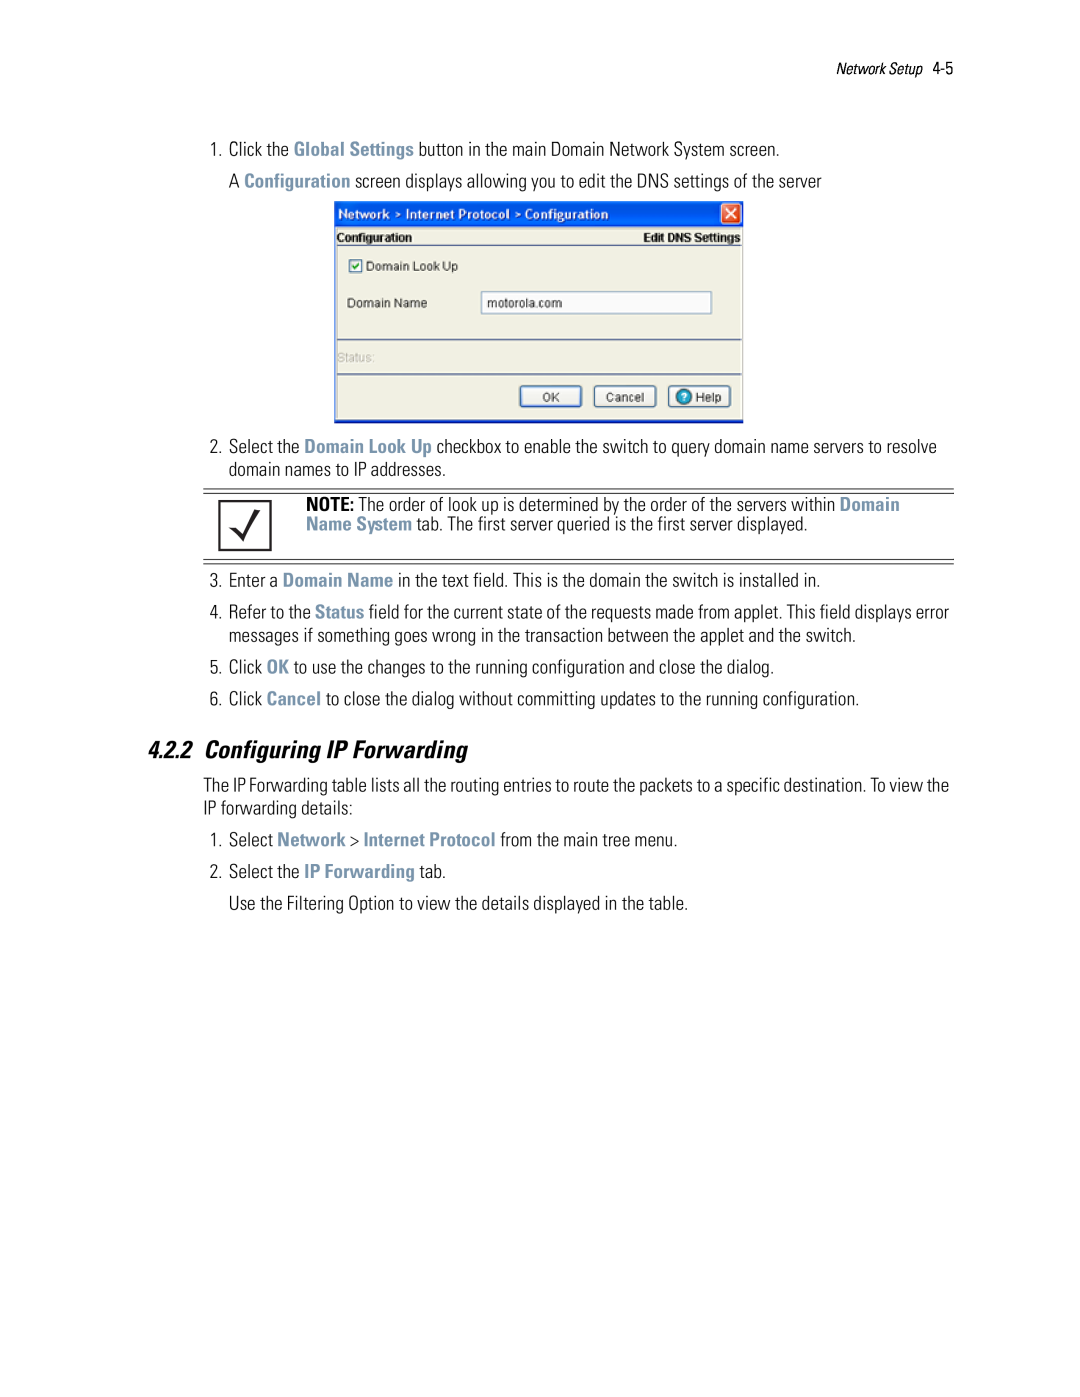 Motorola WS5100 manual 4.2.2Configuring IP Forwarding 